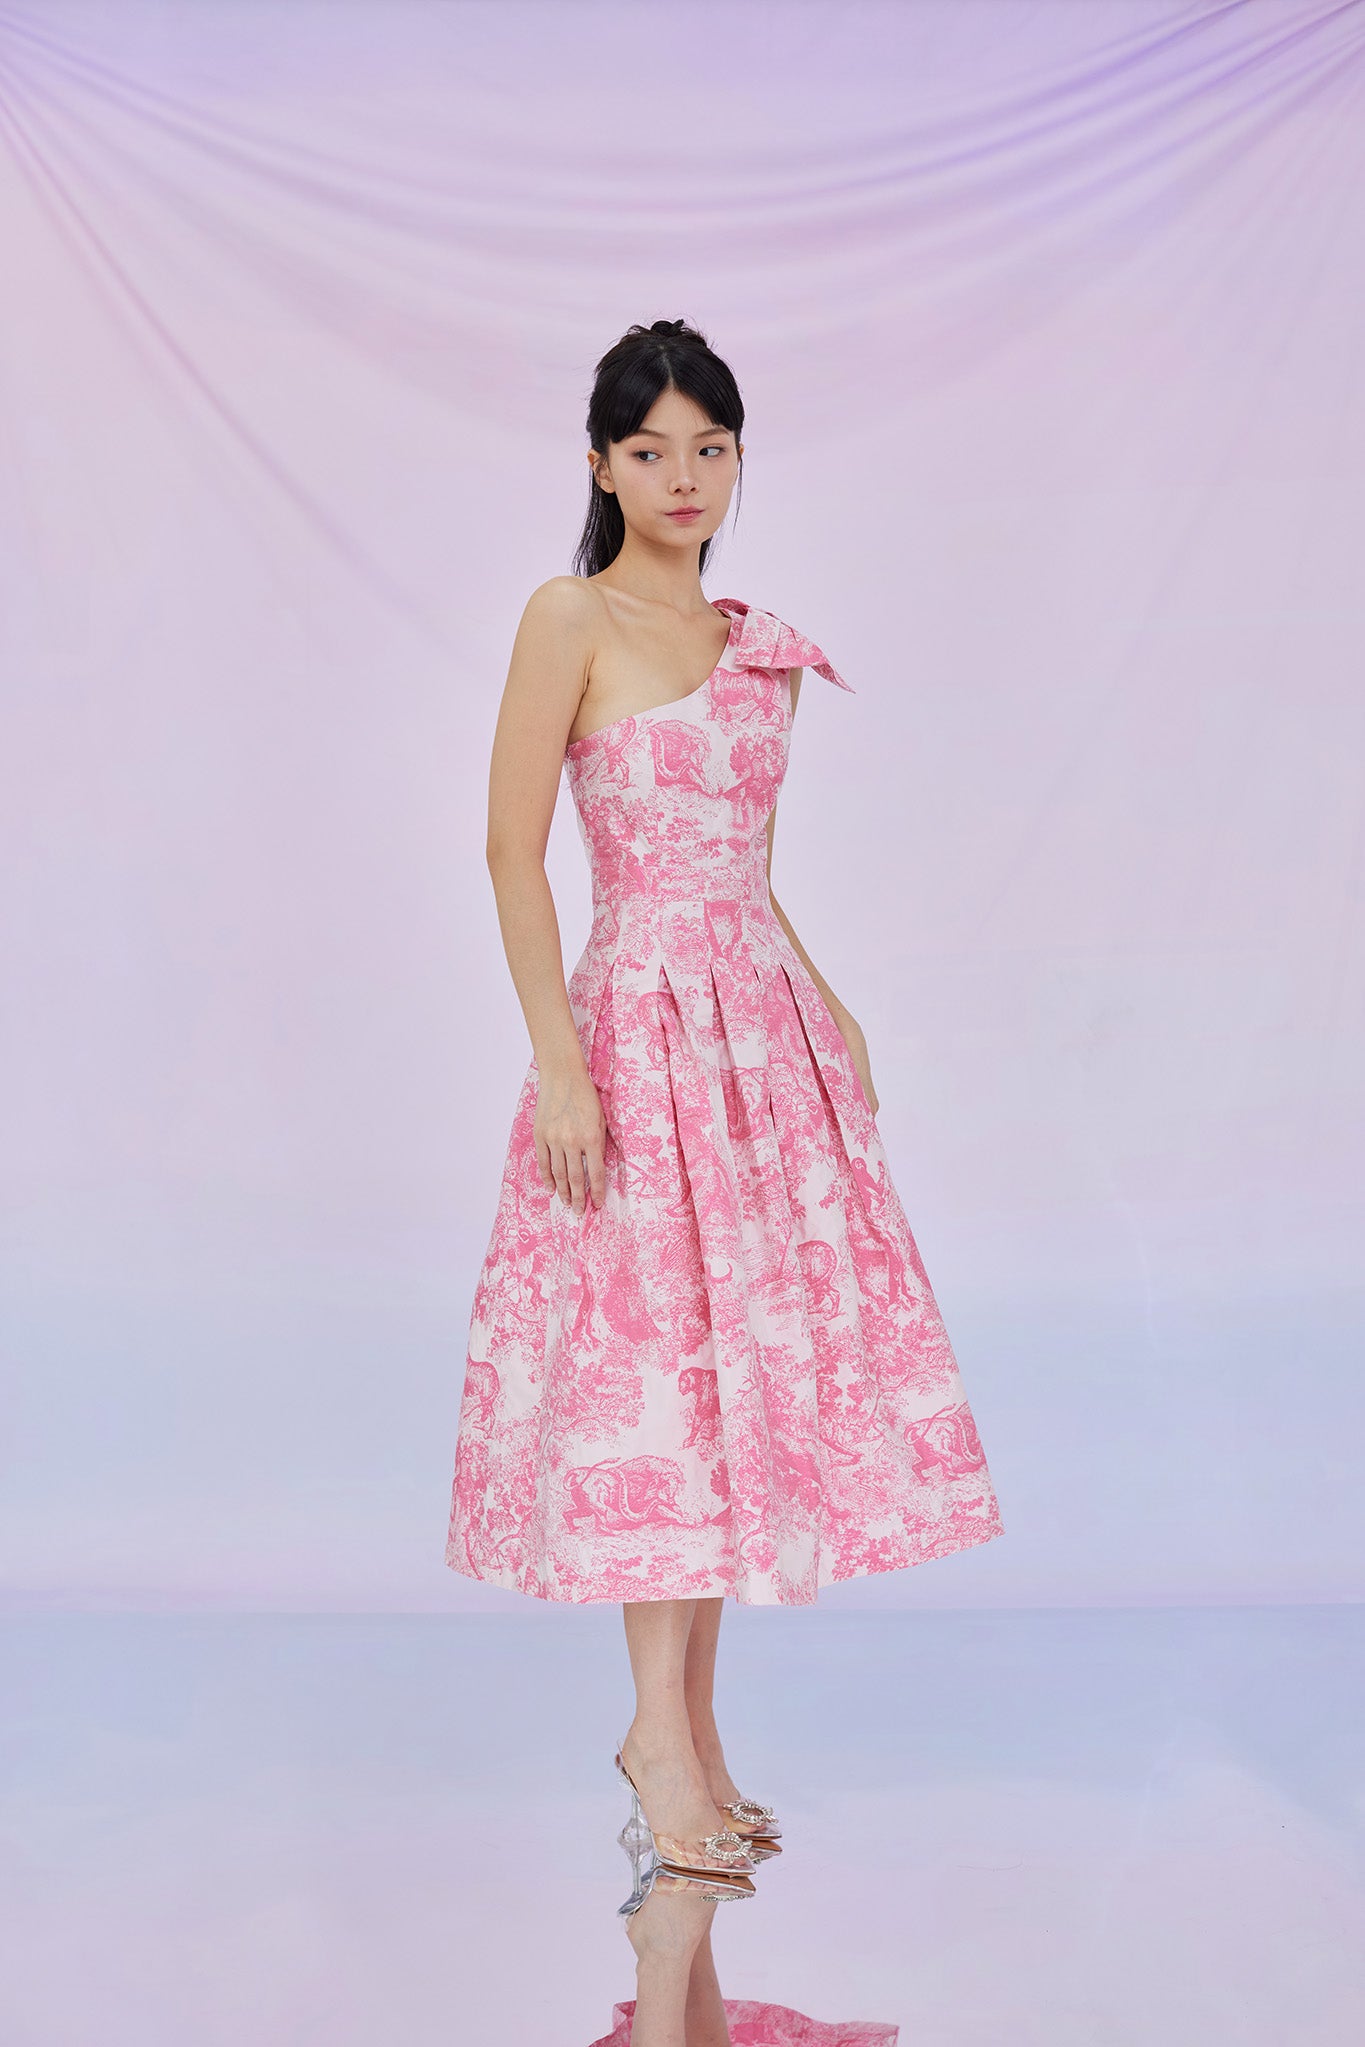 Gwenette Animal Print Pink Dress